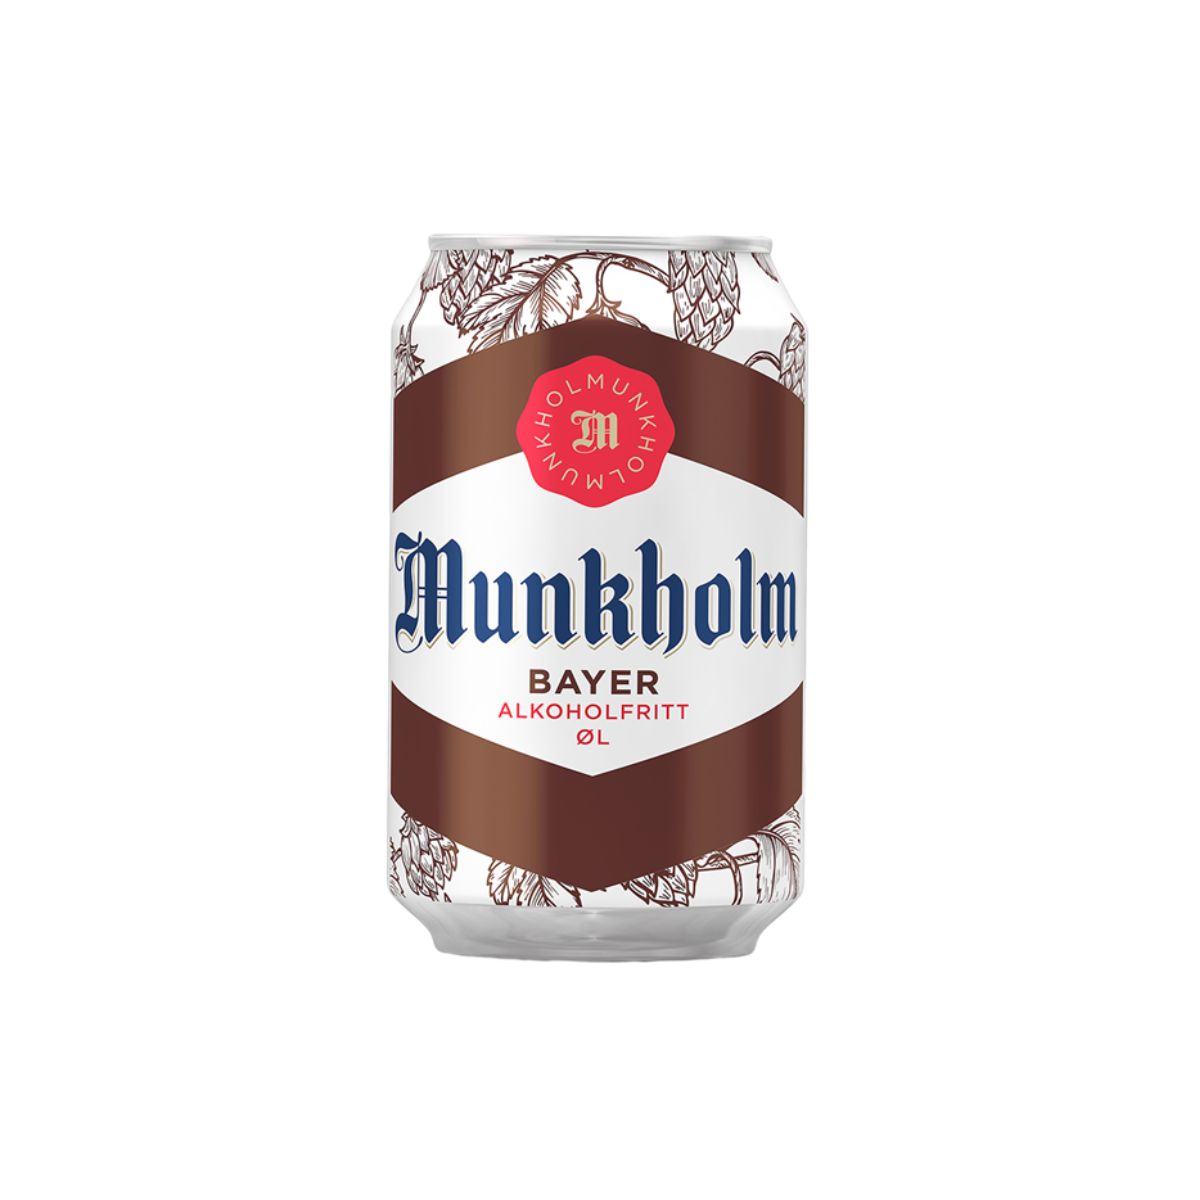 Munkholm Bayer 0,33l bx